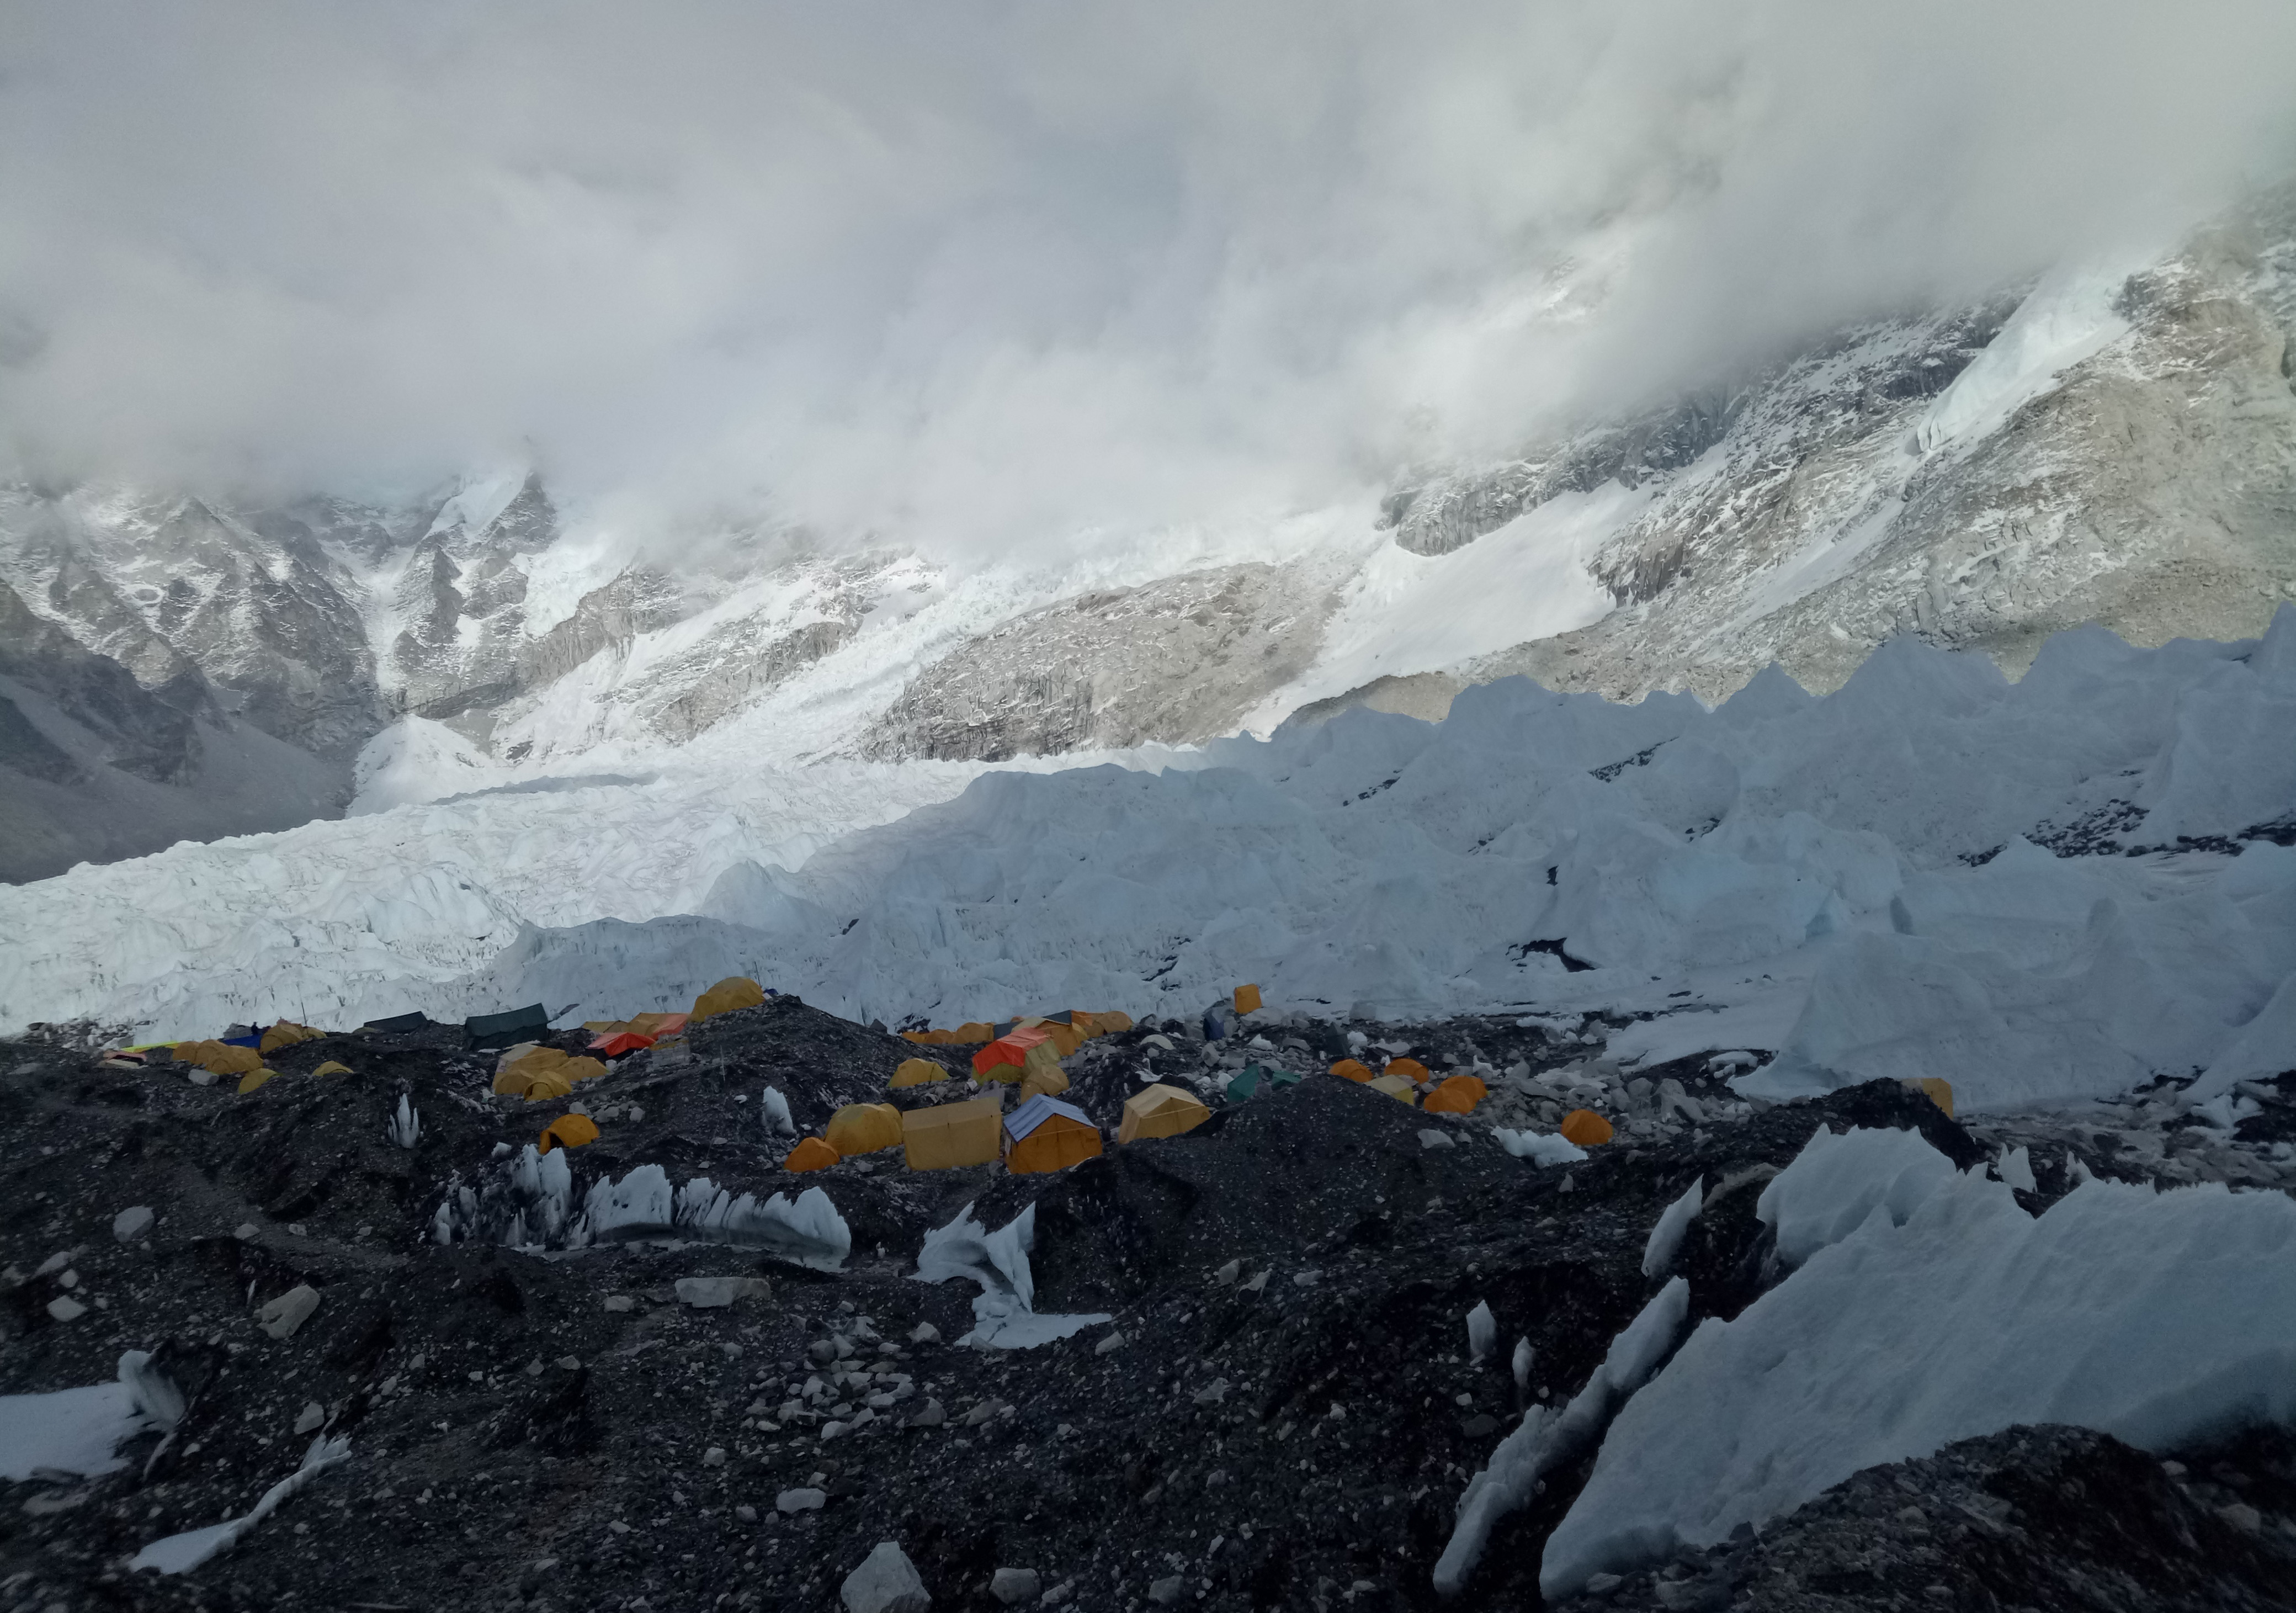 Everest Base Camp 5364 meters. 